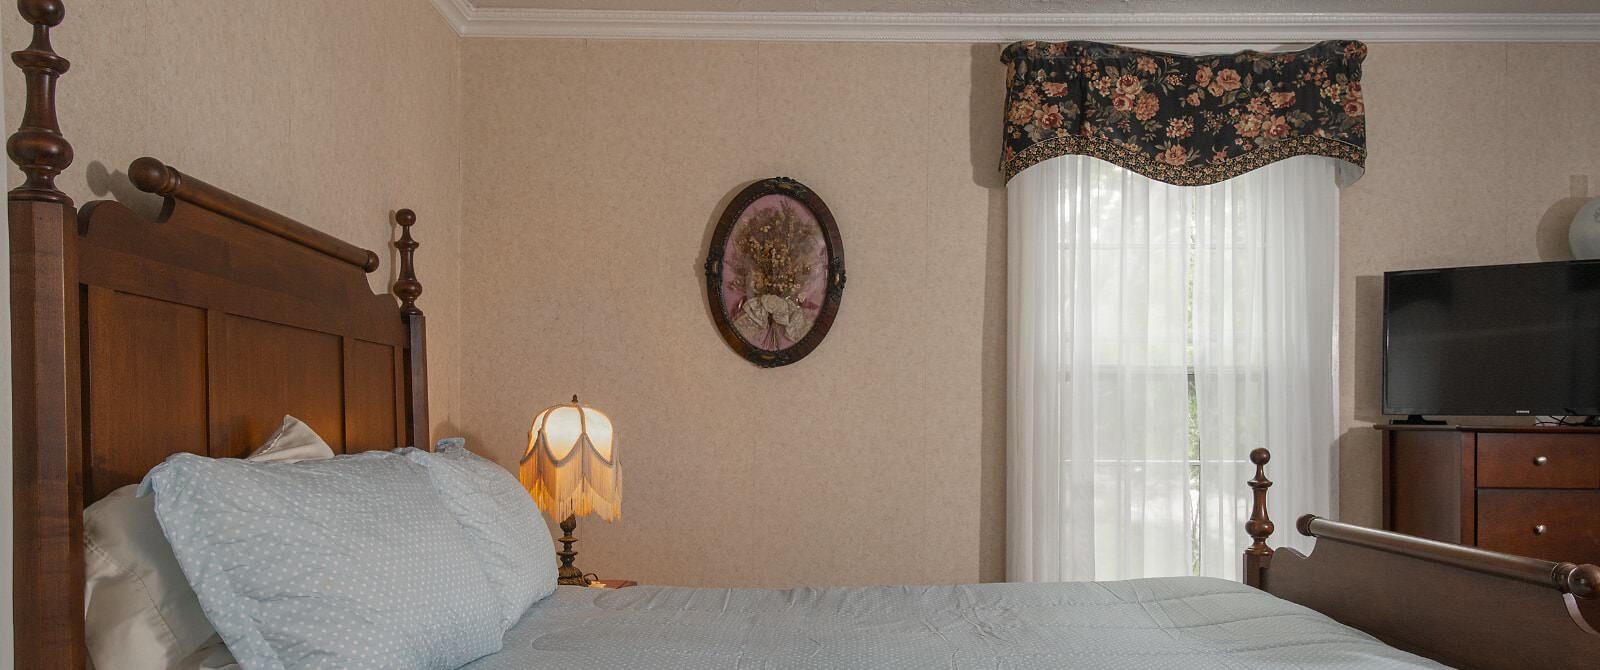 Bedroom with light peach wallpaper, antique wooden headboard, light blue bedding, and dark wooden dresser